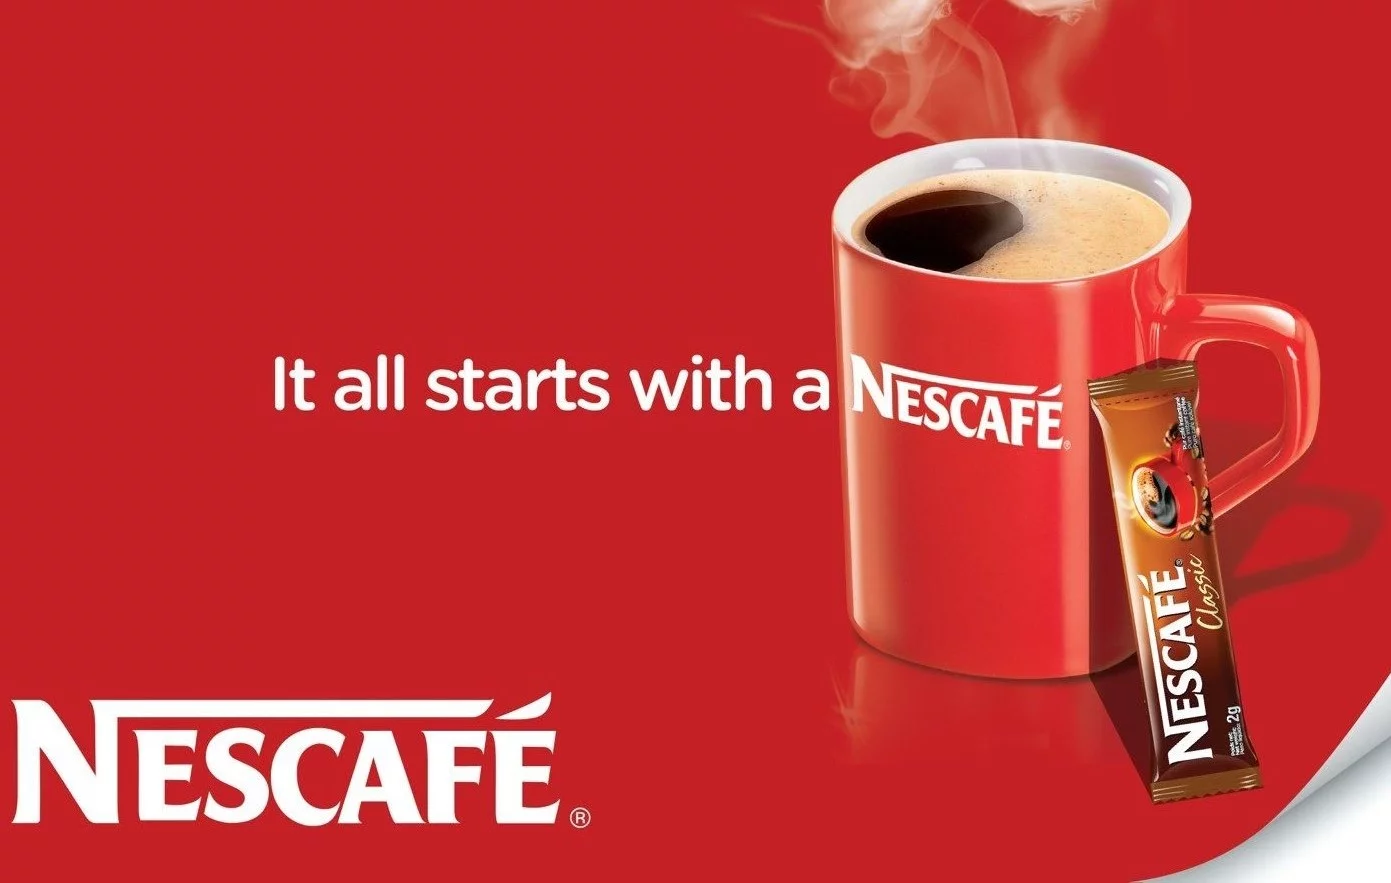 Nescafe Marketing Mix